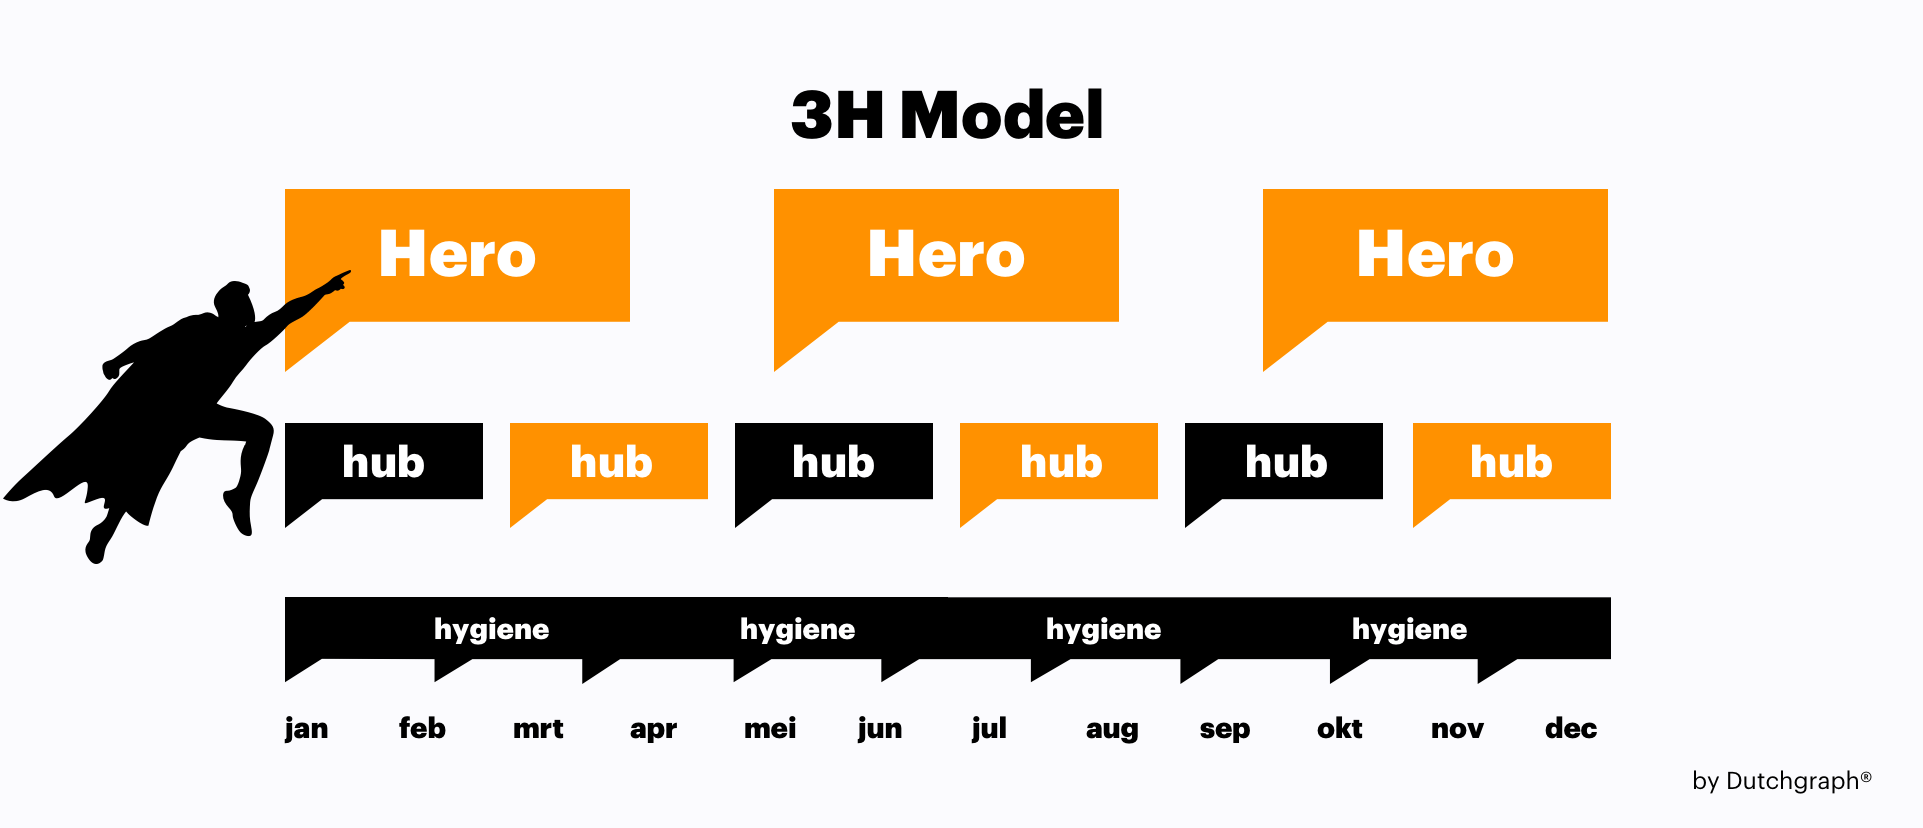 hub hygiene hero content model google